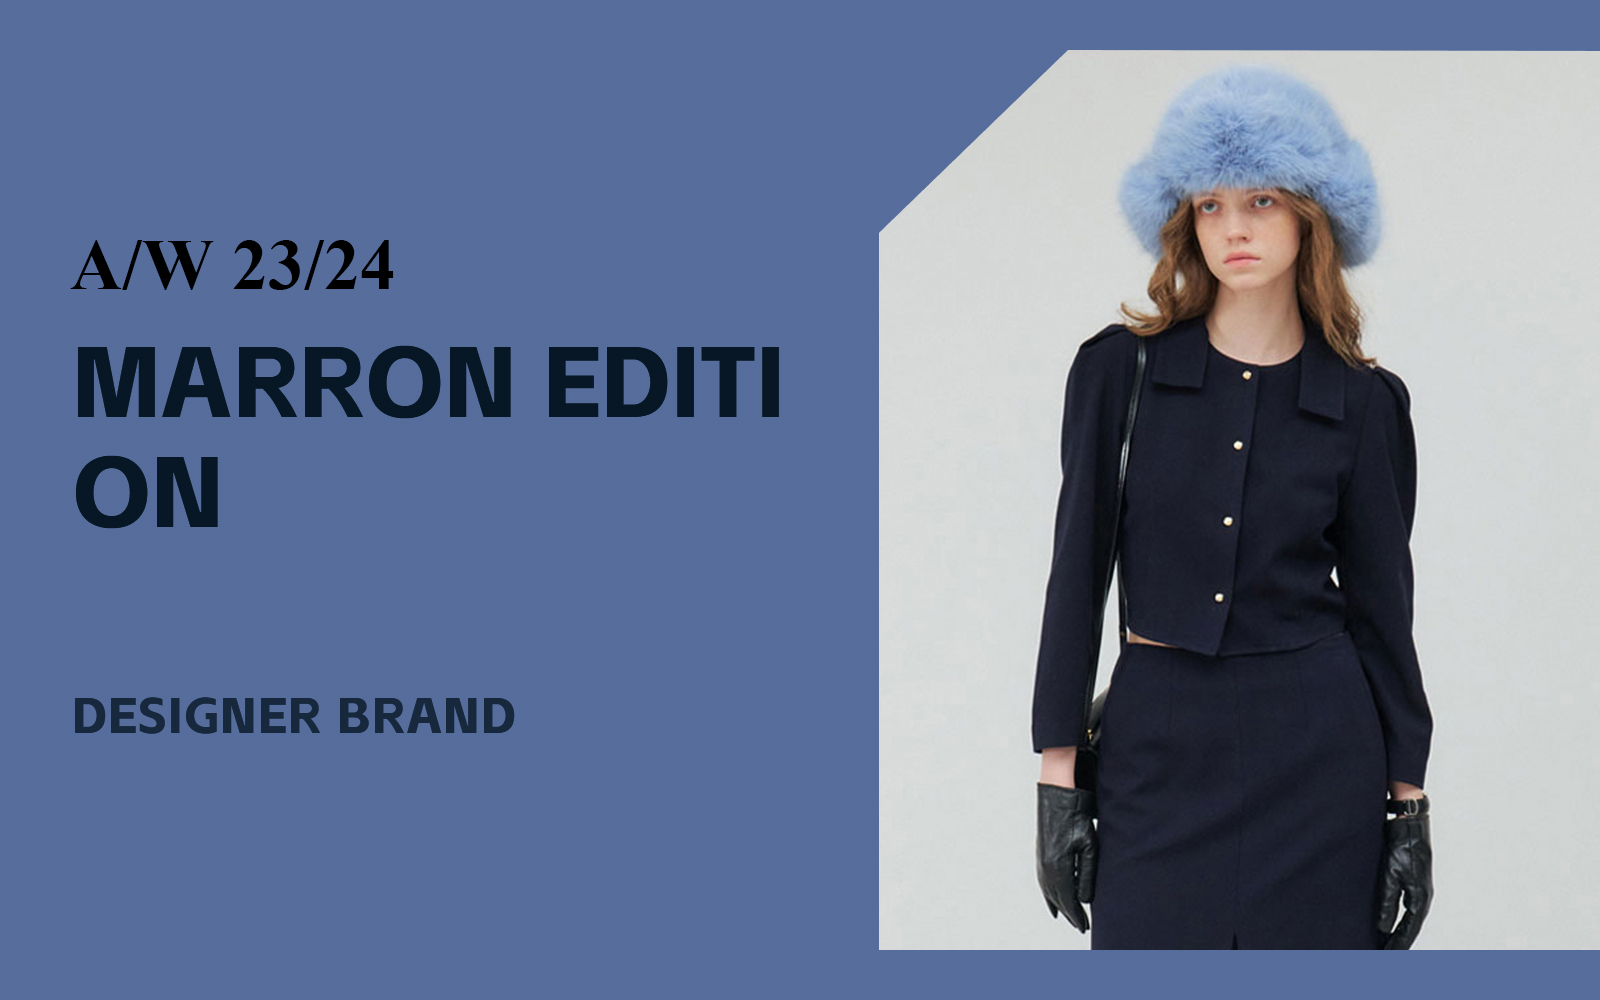 Smart Commuting -- The Analysis of MARRON EDITION The Womenswear Designer Brand